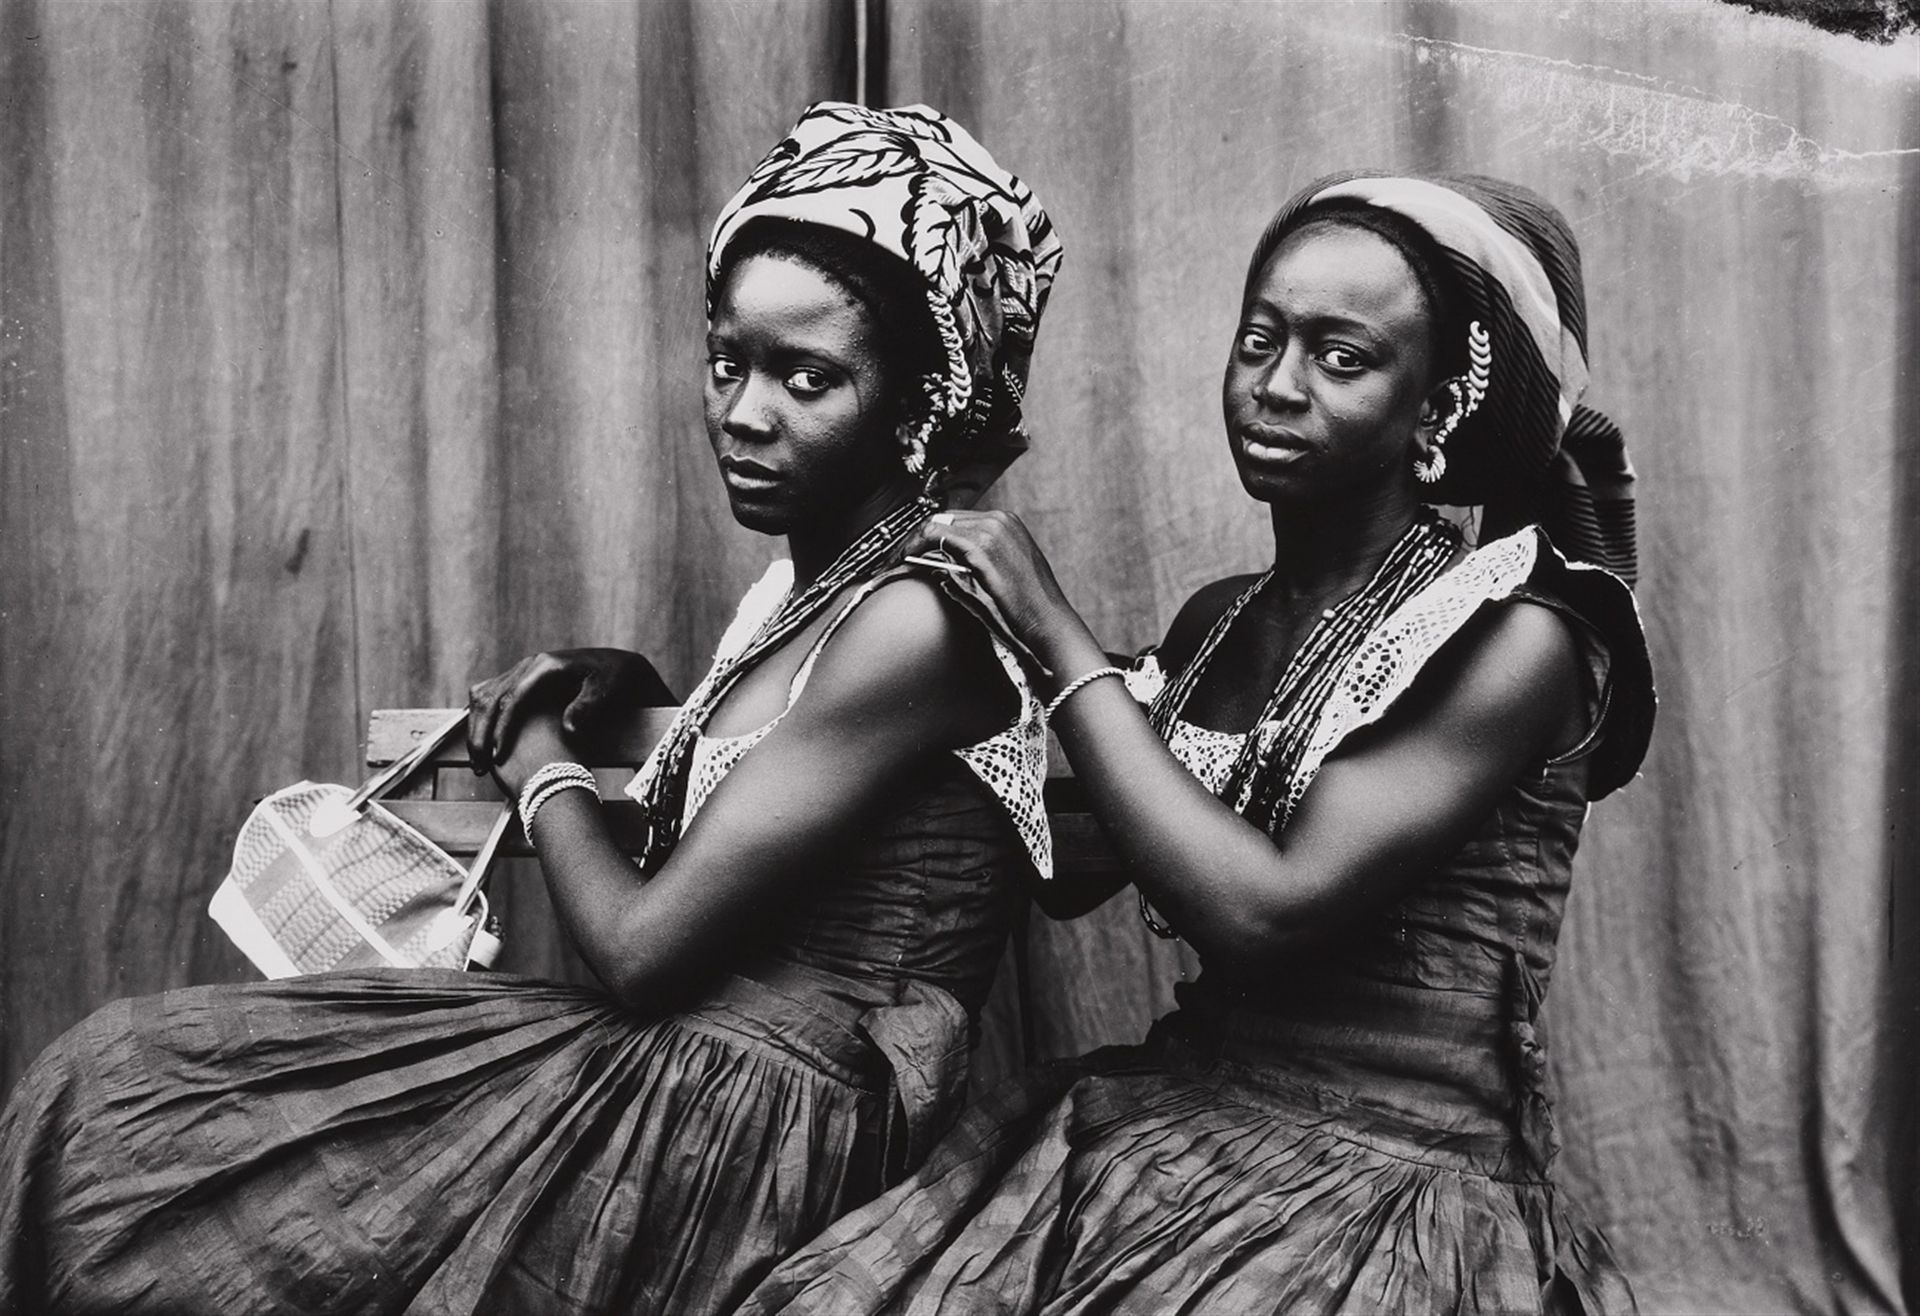 Seydou Keïta Seydou Keïta



Senza titolo

1952 - 1955



Stampa alla gelatina d&hellip;